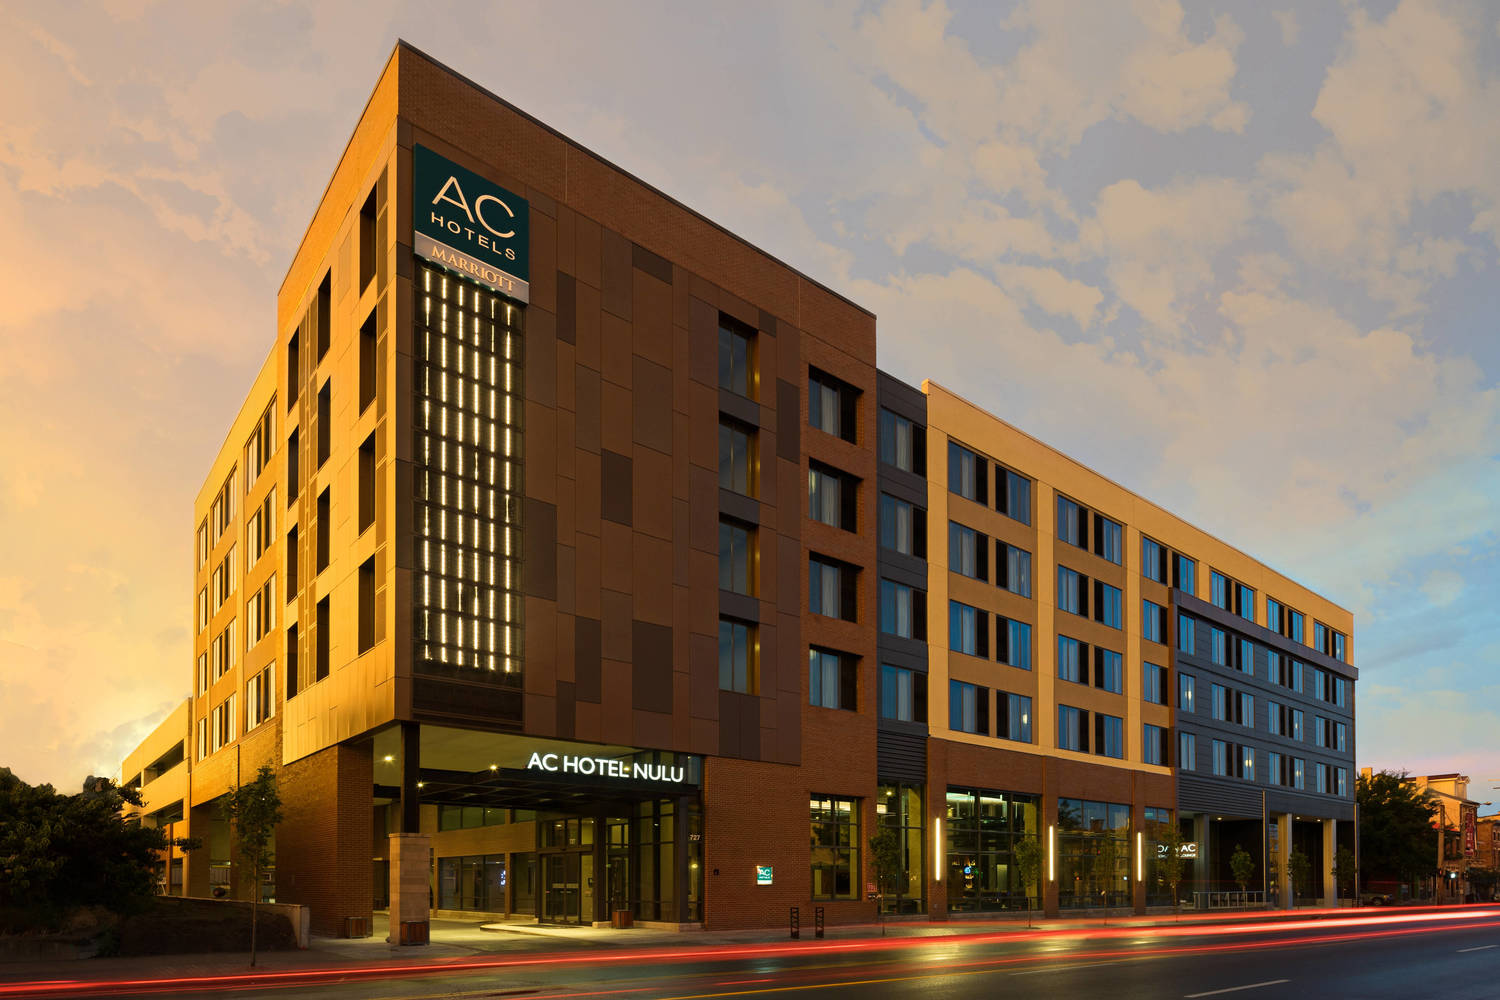 AC Hotel Louisville Downtown, Louisville, KY Jobs | Hospitality Online